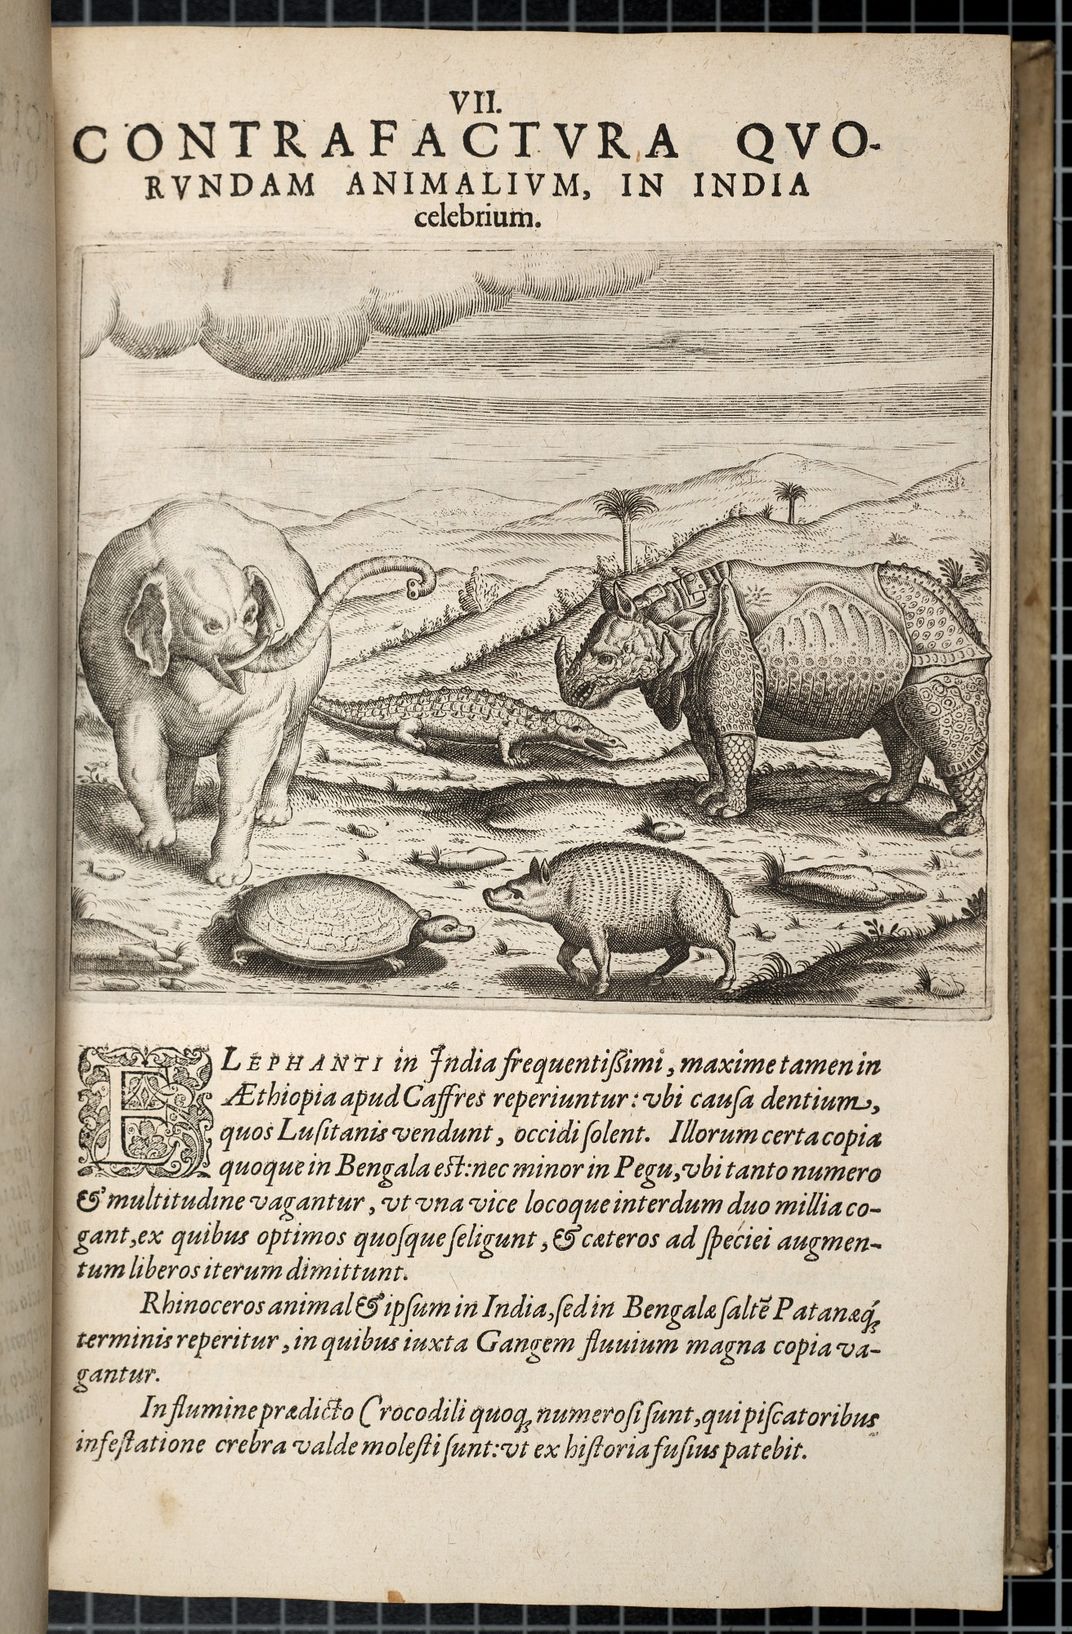 16th century natural history illustration with elephant, aligator, rhinoceros, turtle, and warthog.